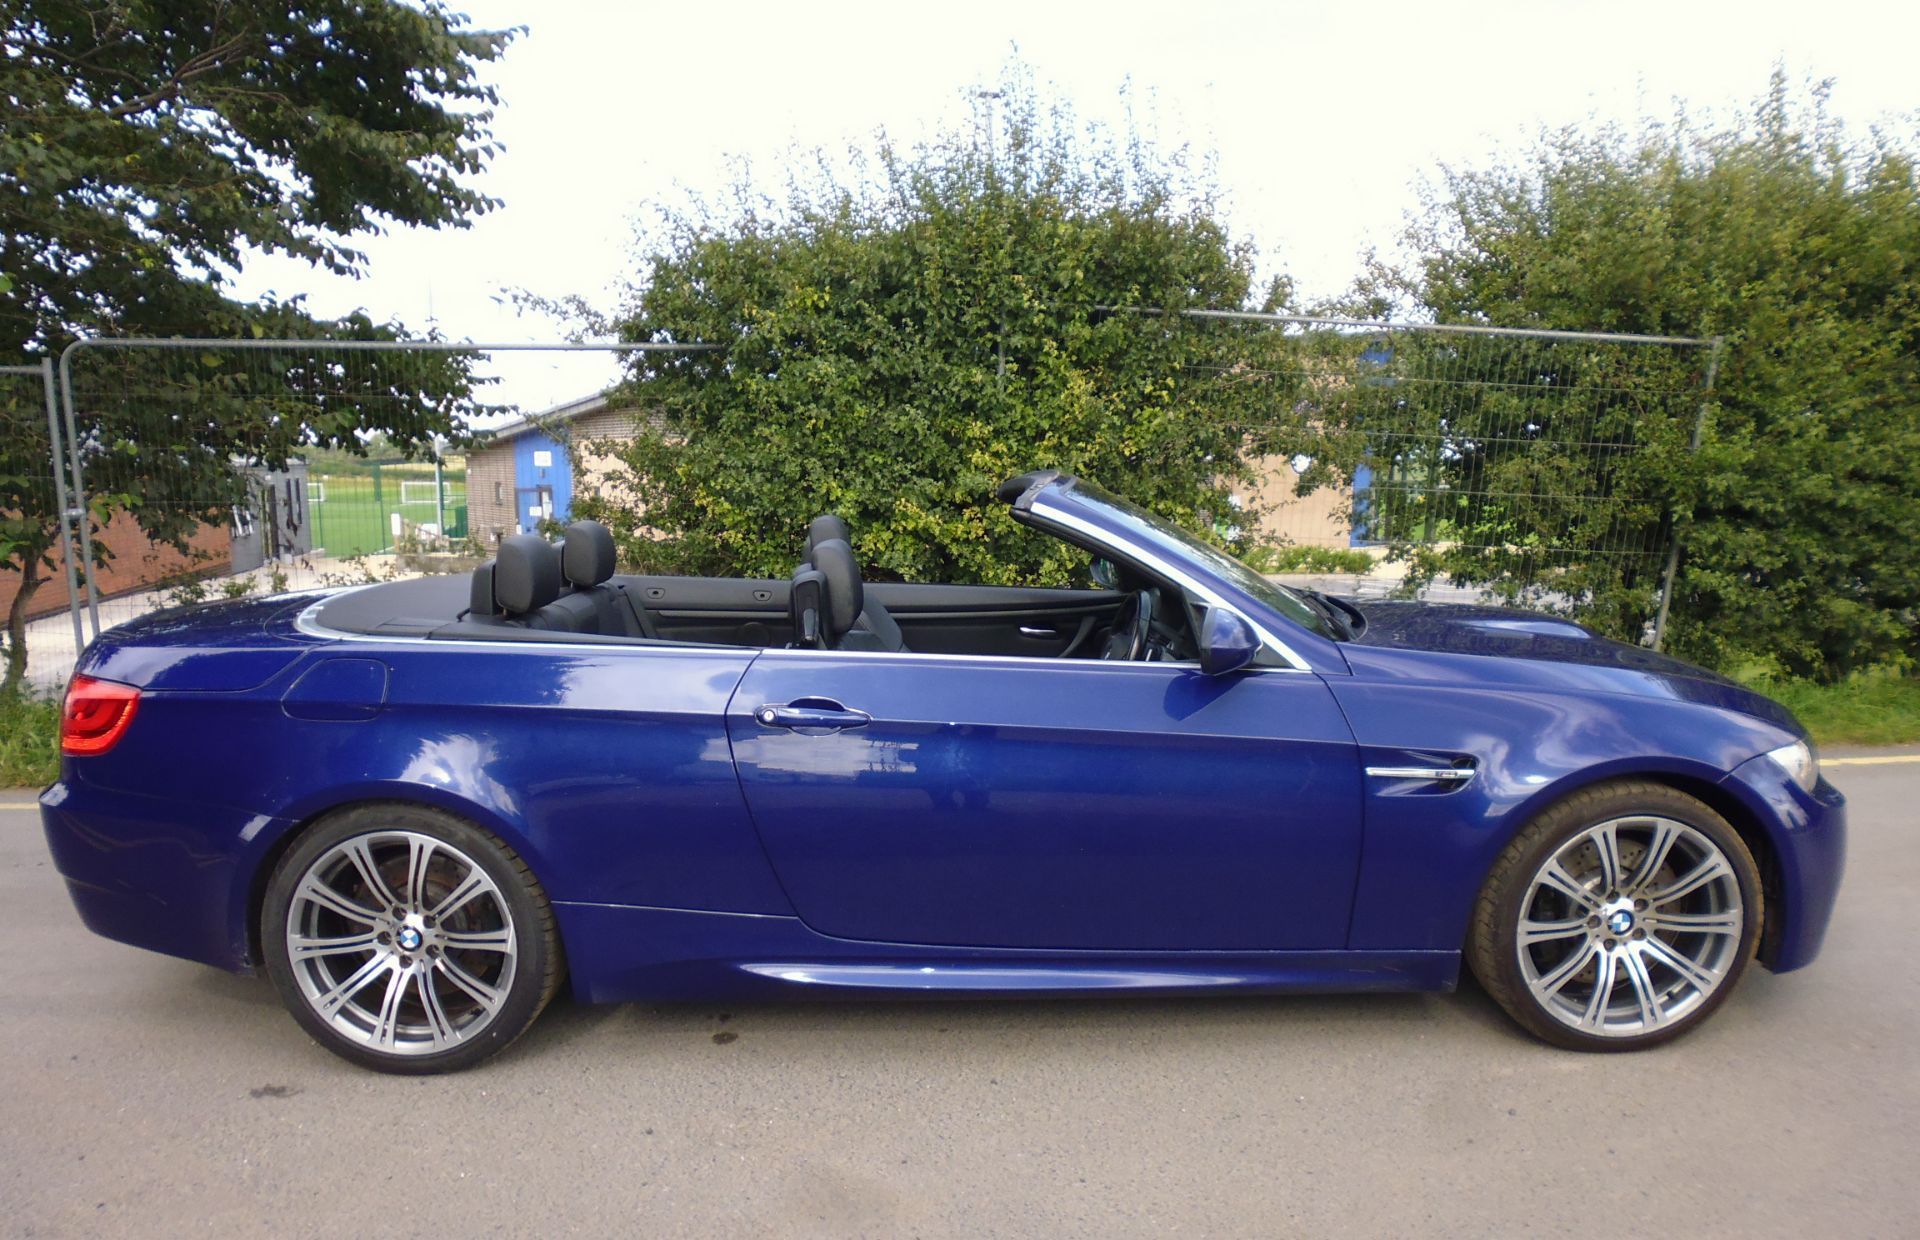 2012 BMW M3 SEMI AUTO BLUE CONVERTIBLE, 4.0 PETROL ENGINE, 19" ALLOYS *NO VAT* - Image 2 of 4